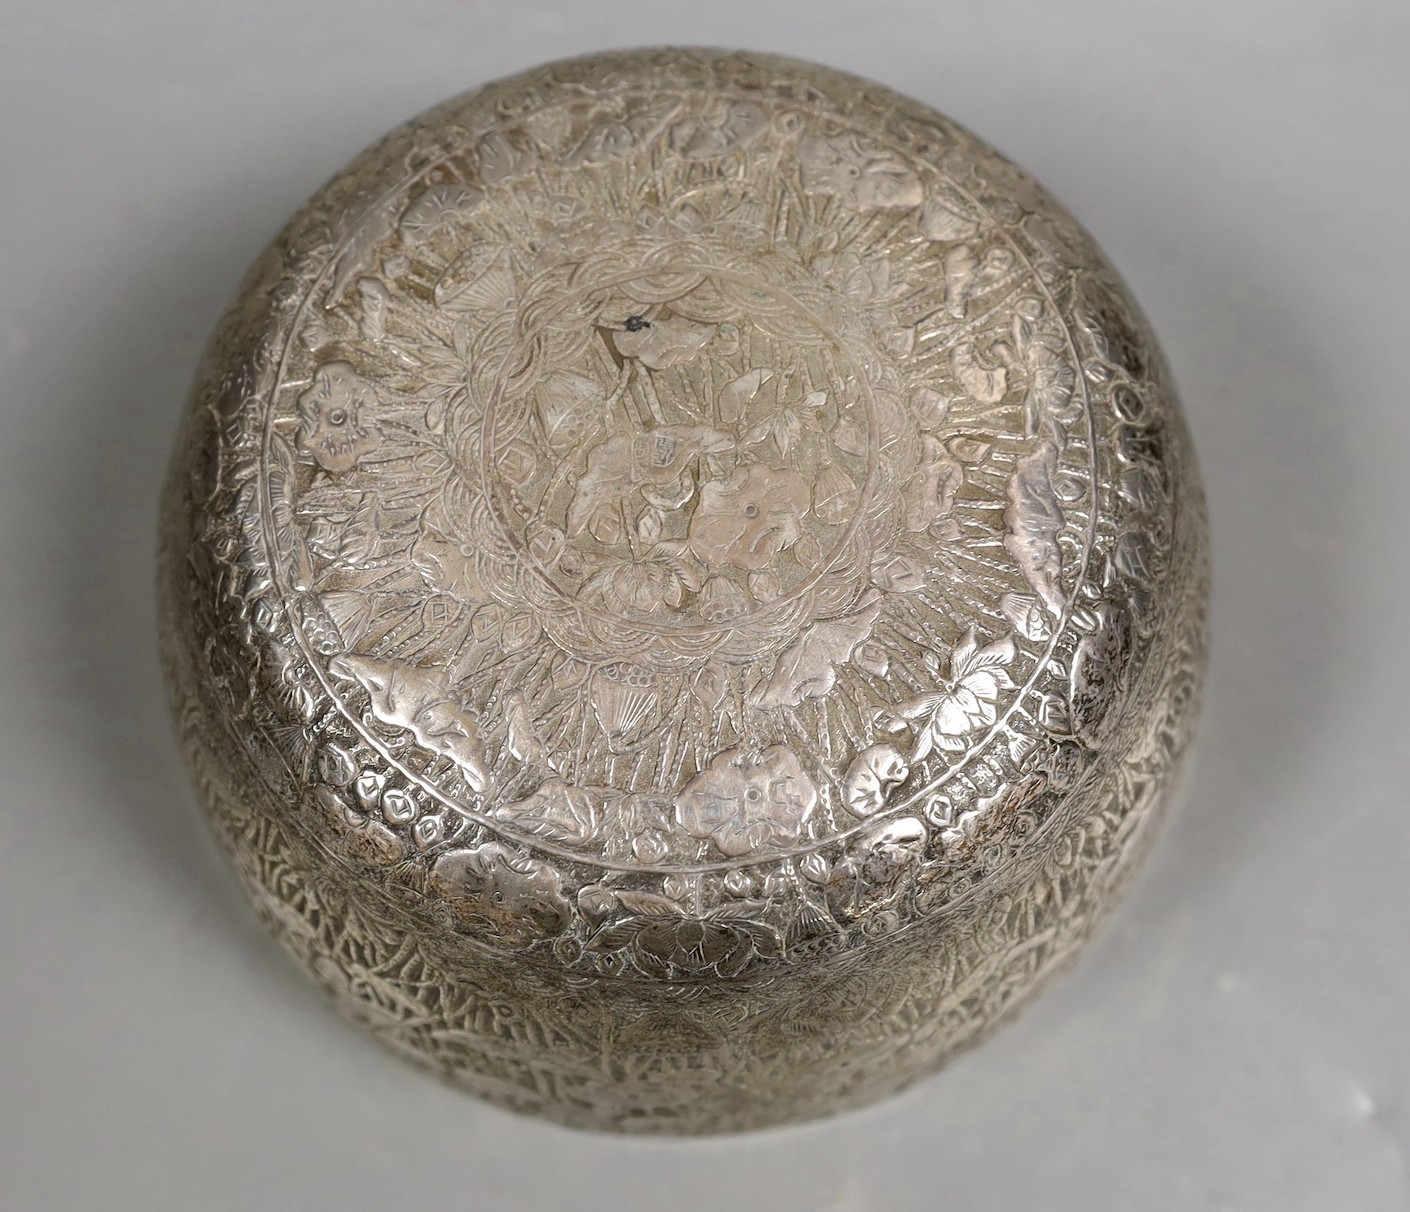 An Eastern embossed white metal bowl, diameter 17.7cm, 9.4oz.